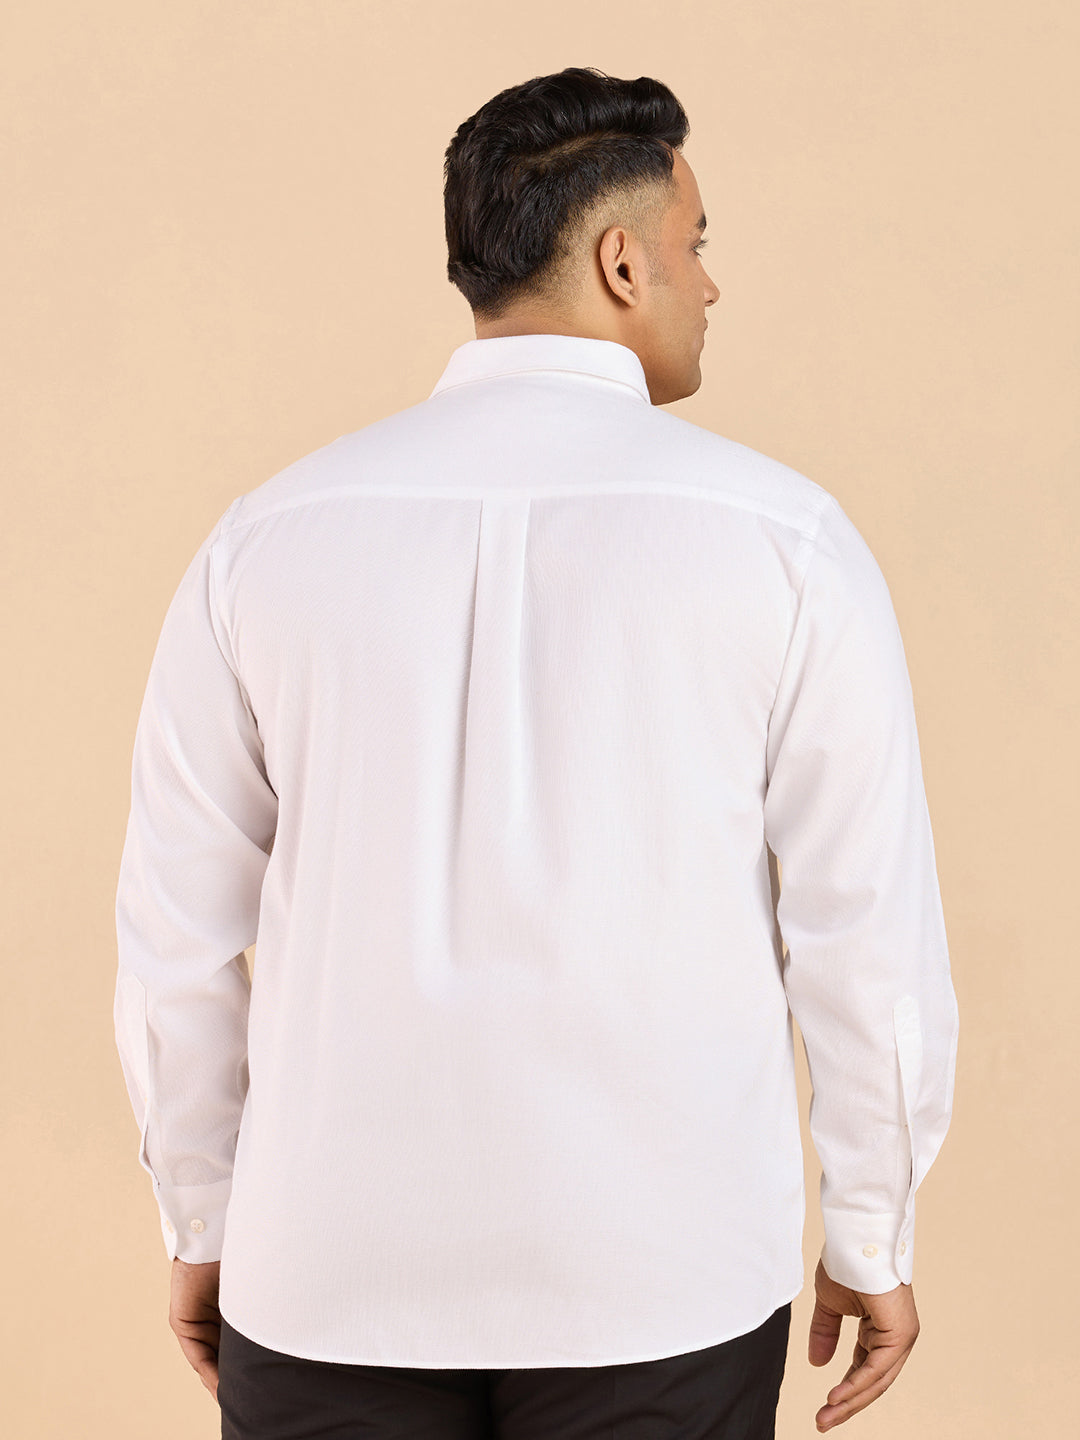 Structure Supima Cotton Shirt